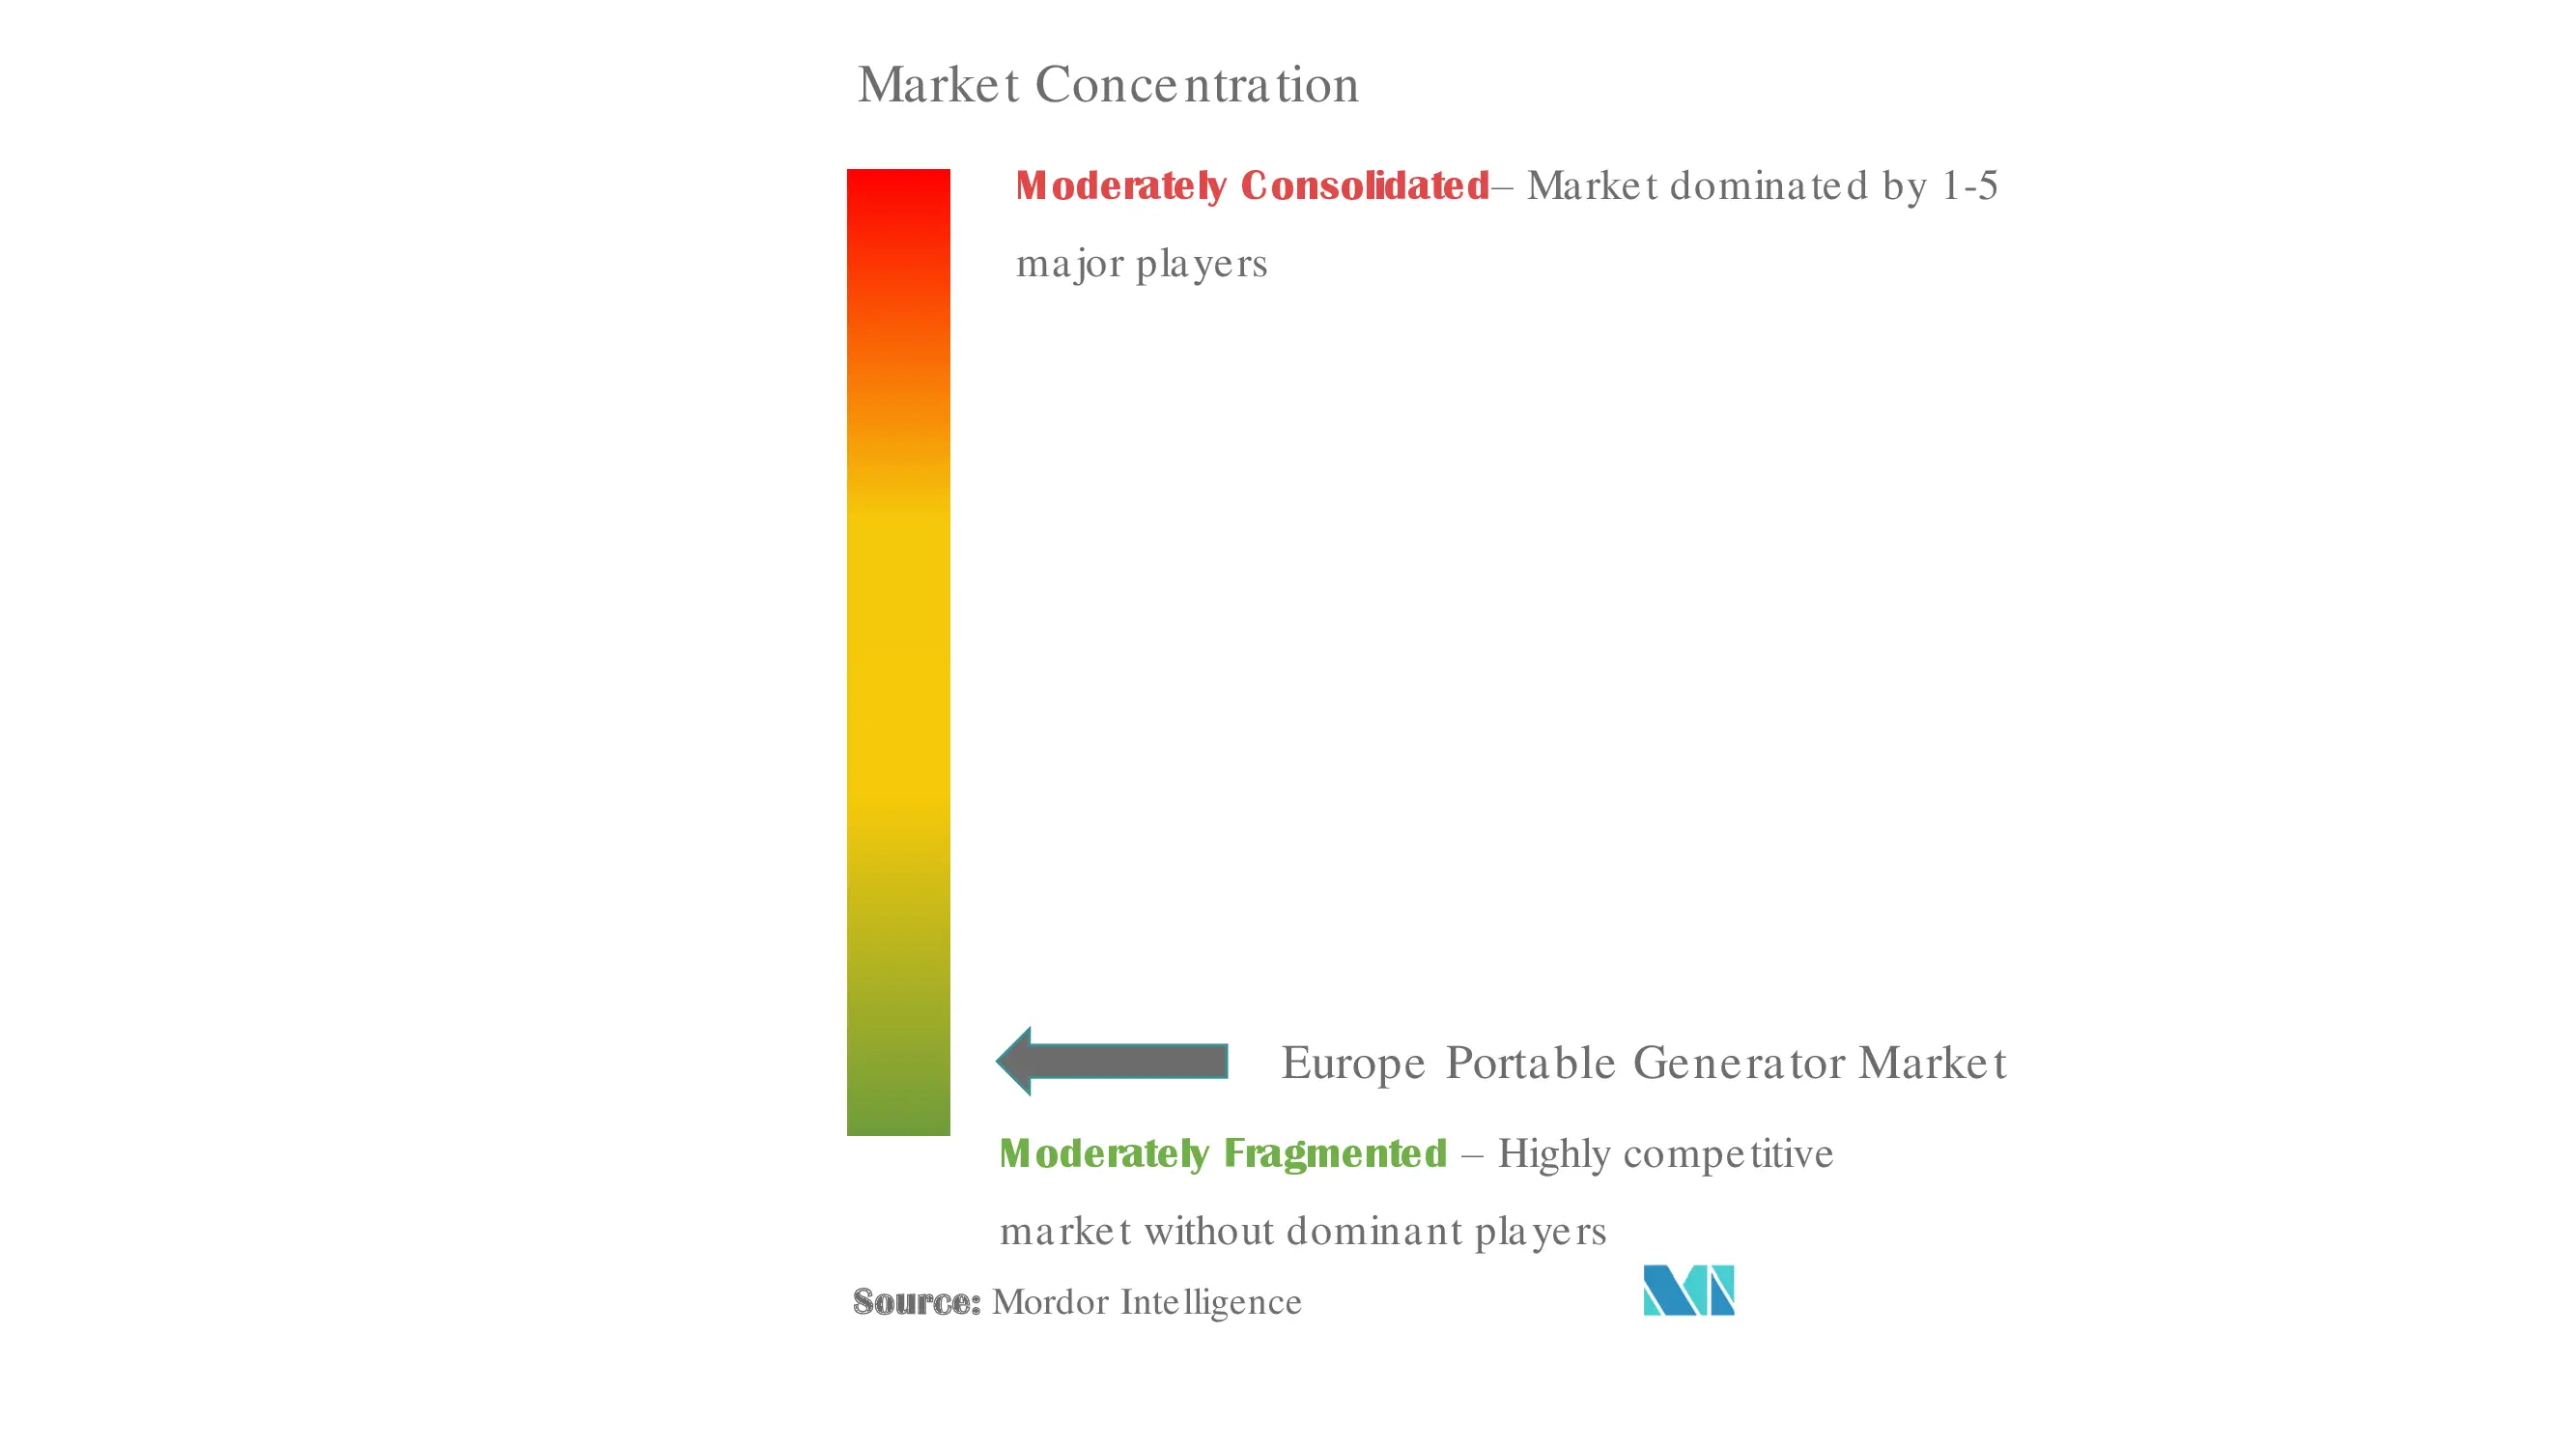 Europe Portable Generator Market Concentration